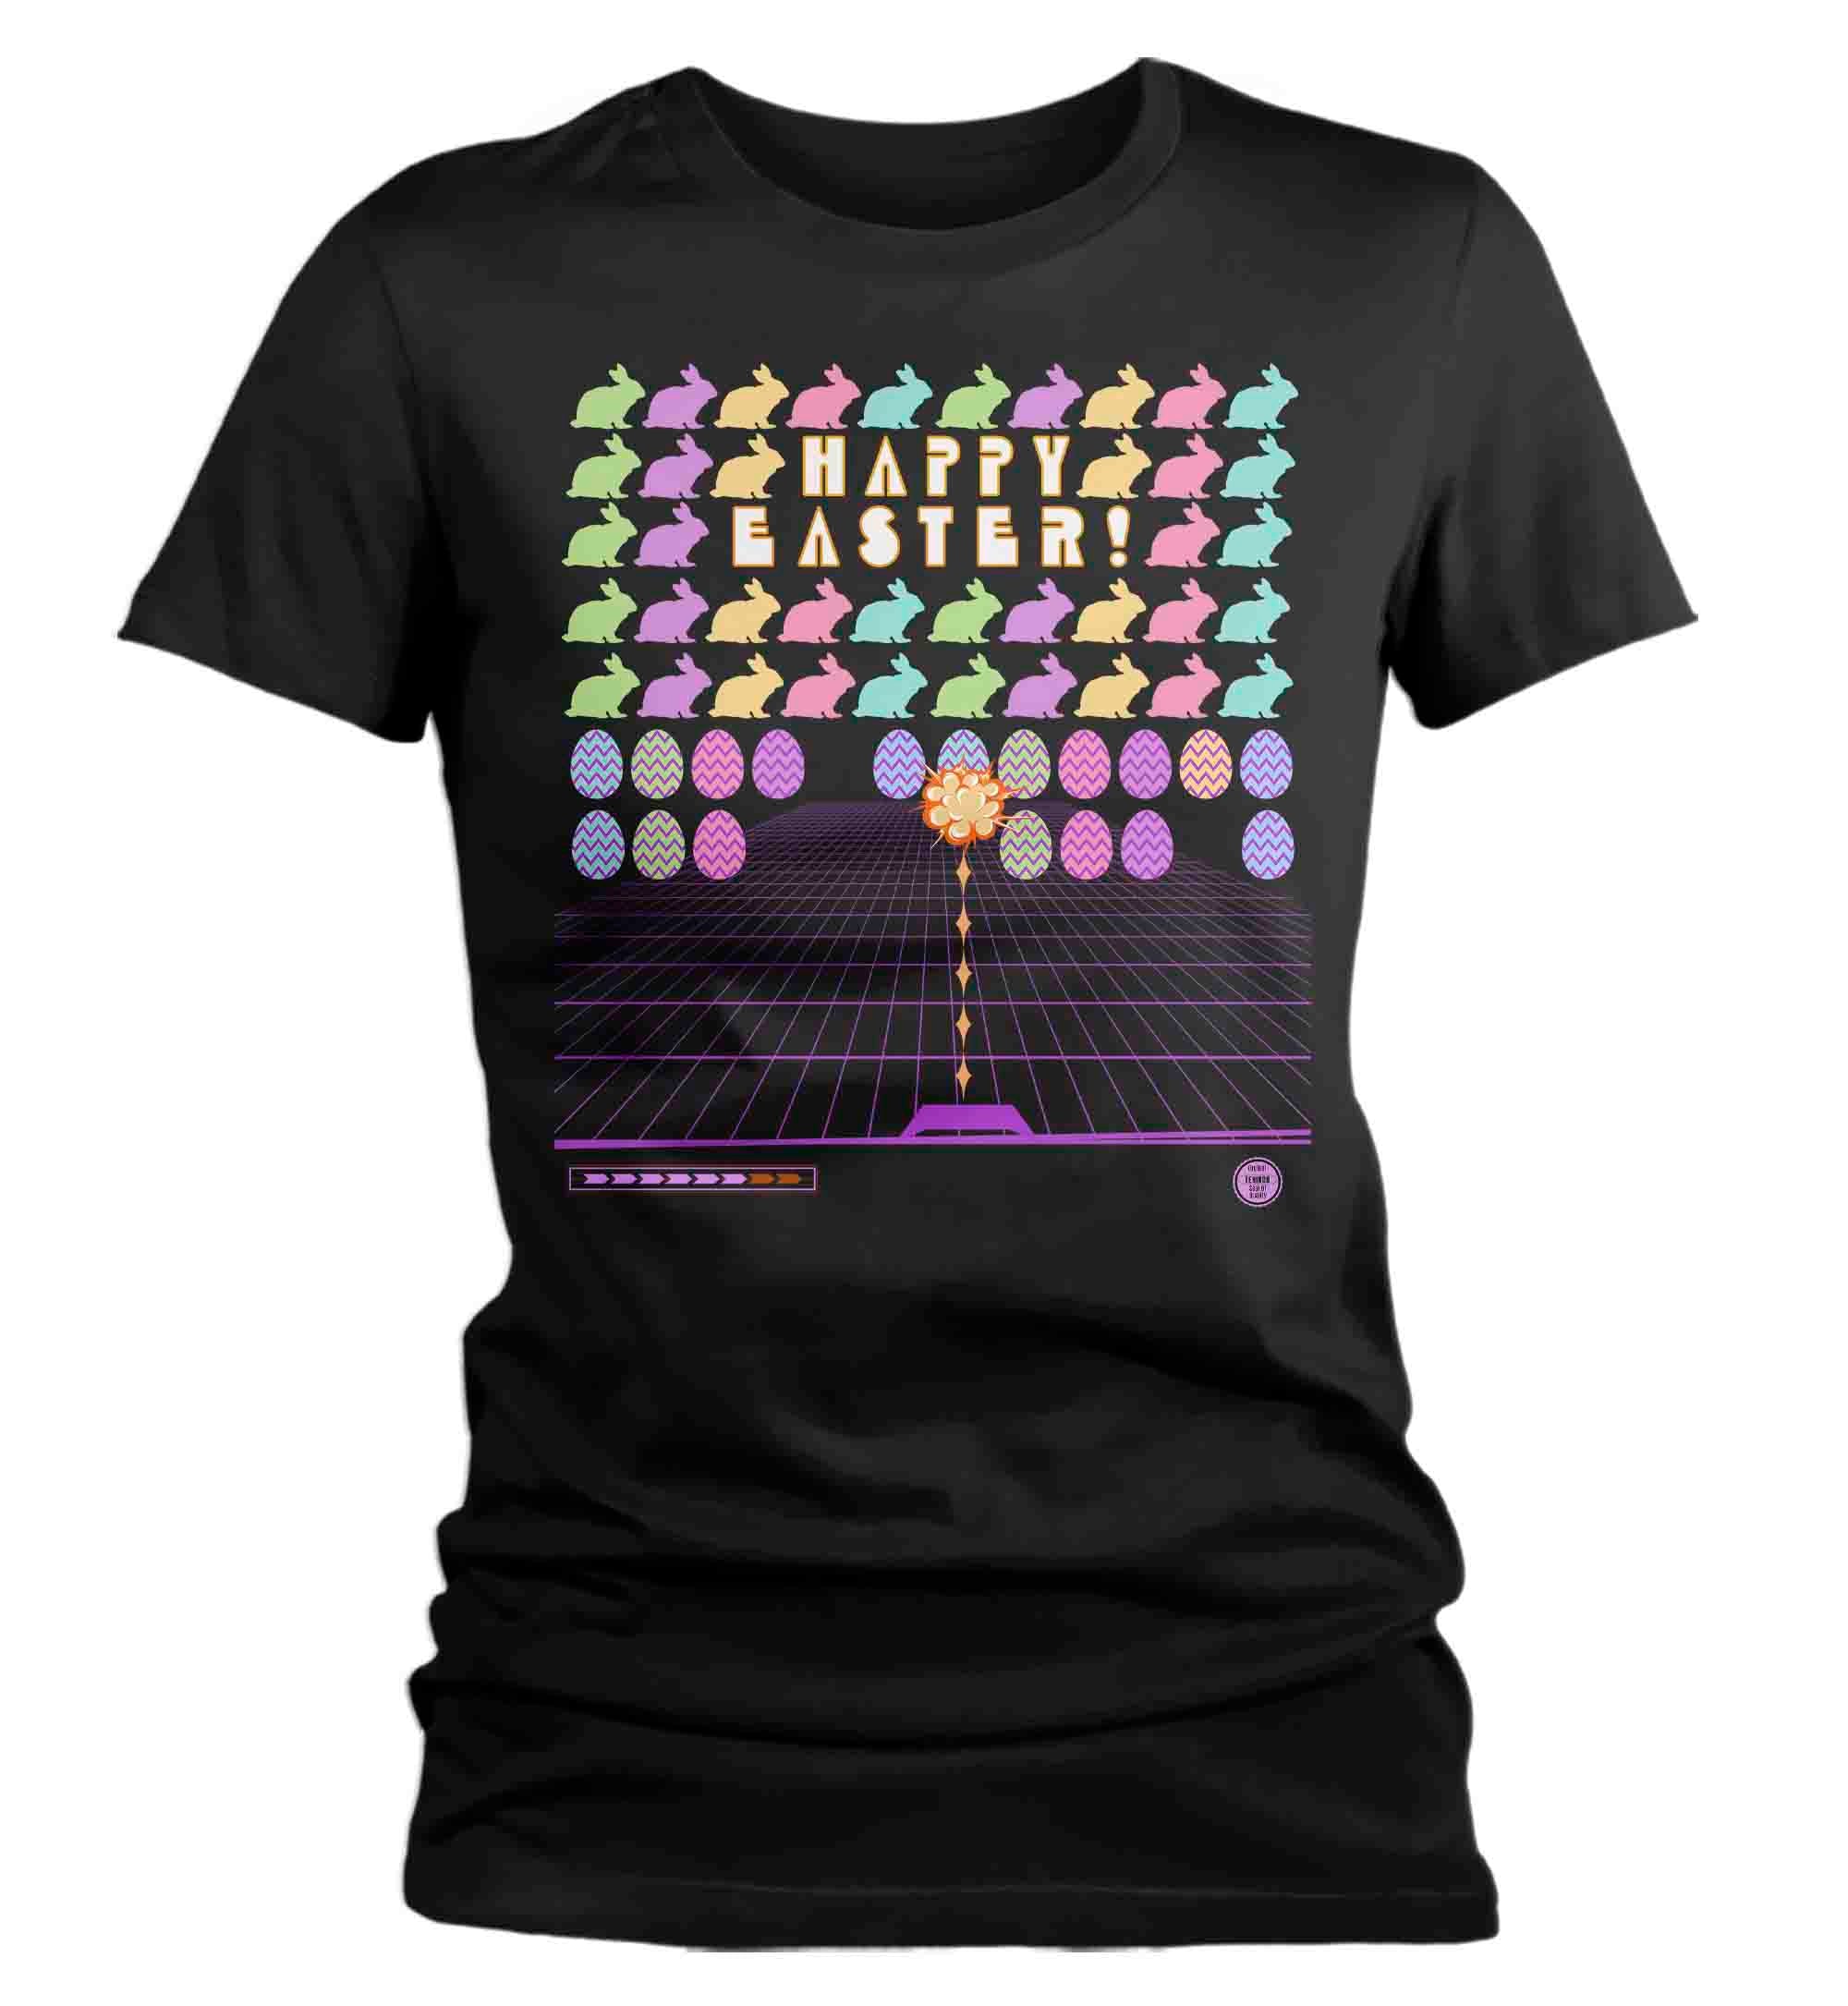 Women’S Easter Shirt Retro Gamer T-Shirt Gaming Easter Gift Egg Bunny Tee Arcade Graphic Vintage T Shirt Ladies